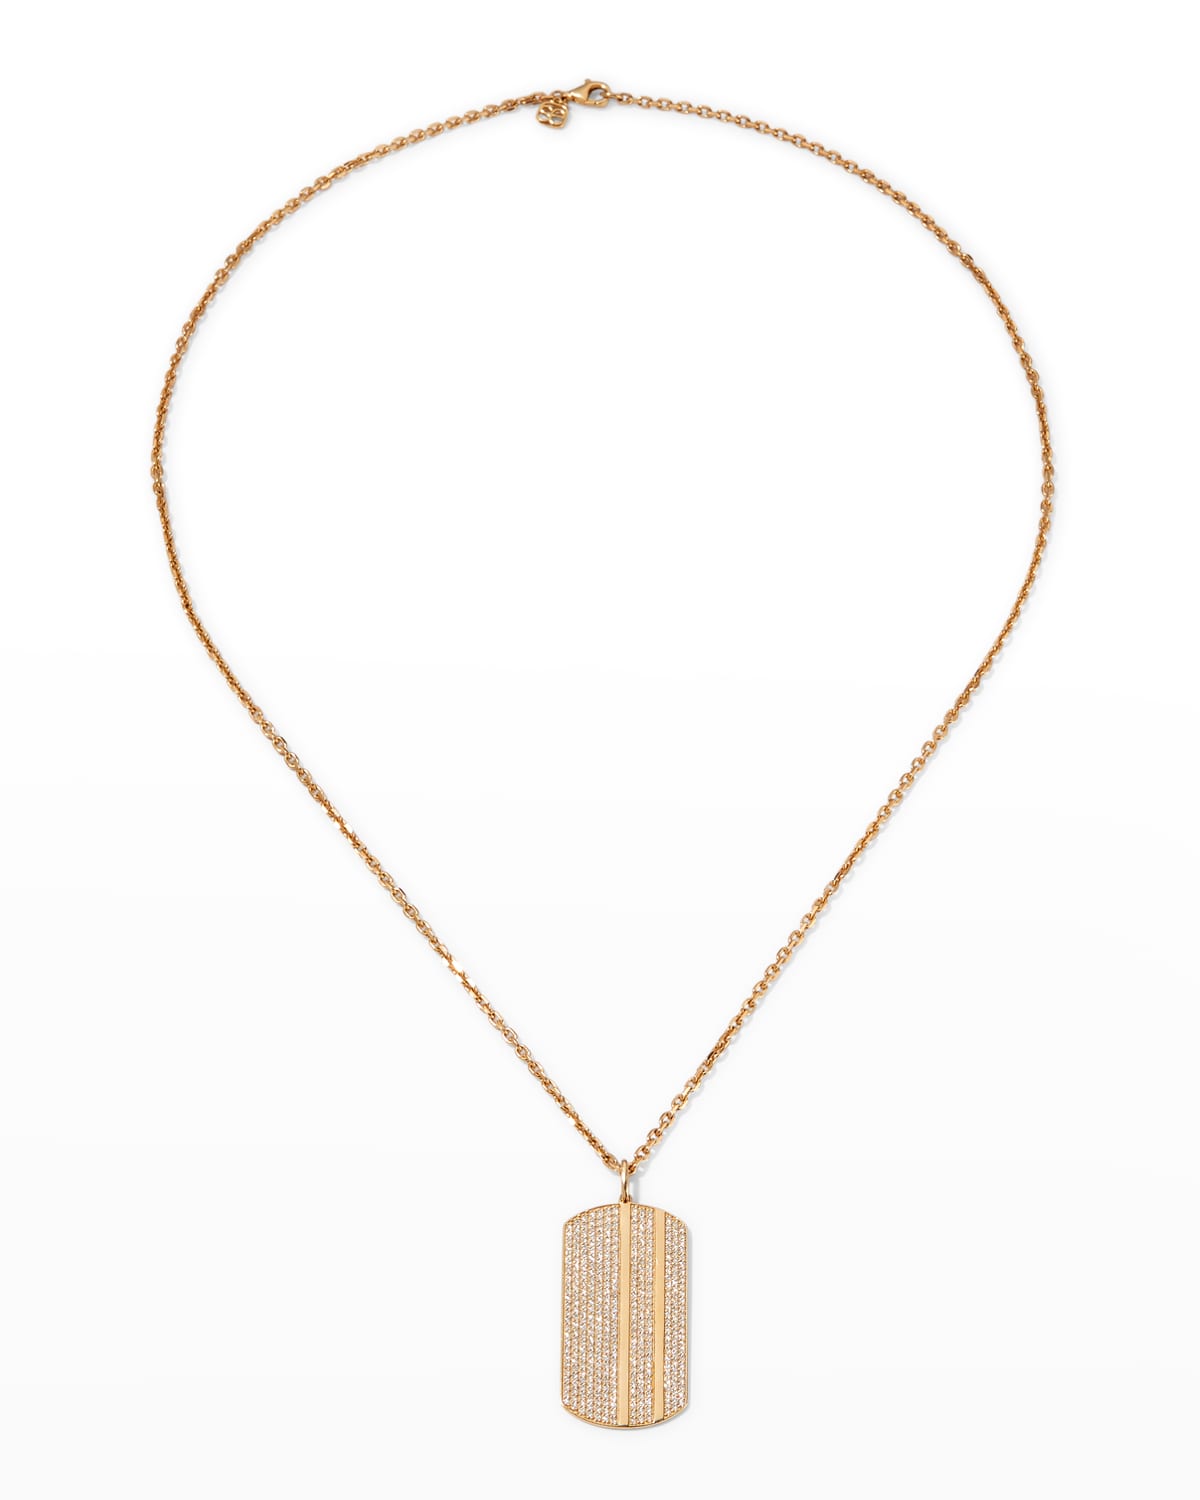 Men's 14K Gold Pav&eacute; Diamond Dog Tag Necklace